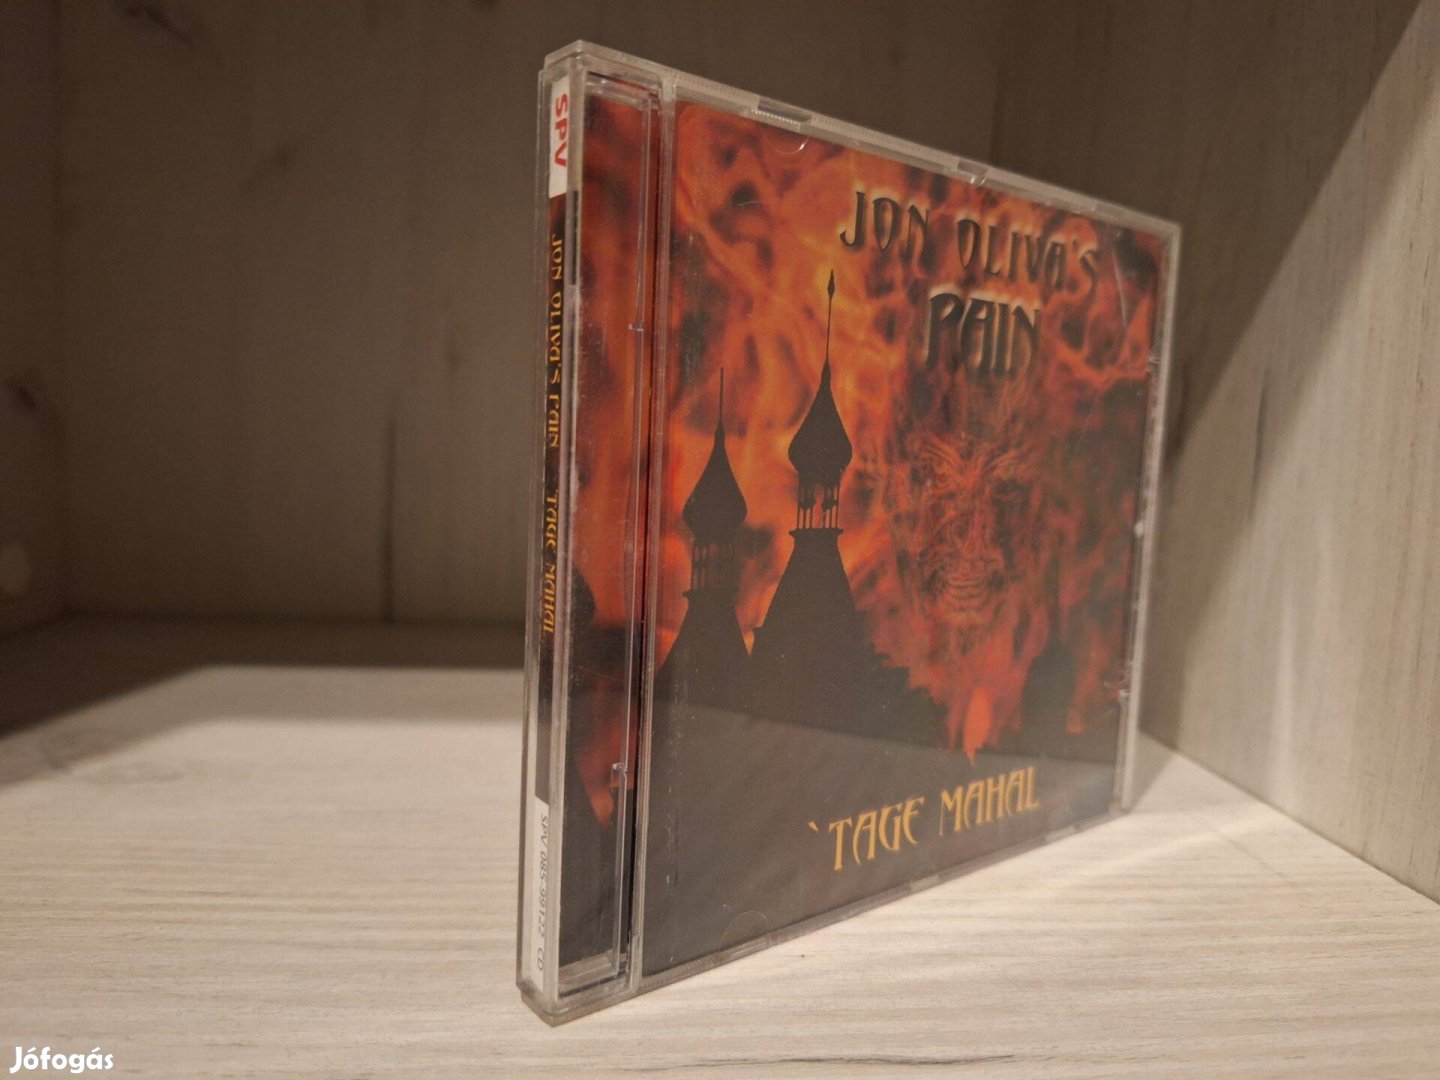 Jon Oliva's Pain - 'Tage Mahal CD